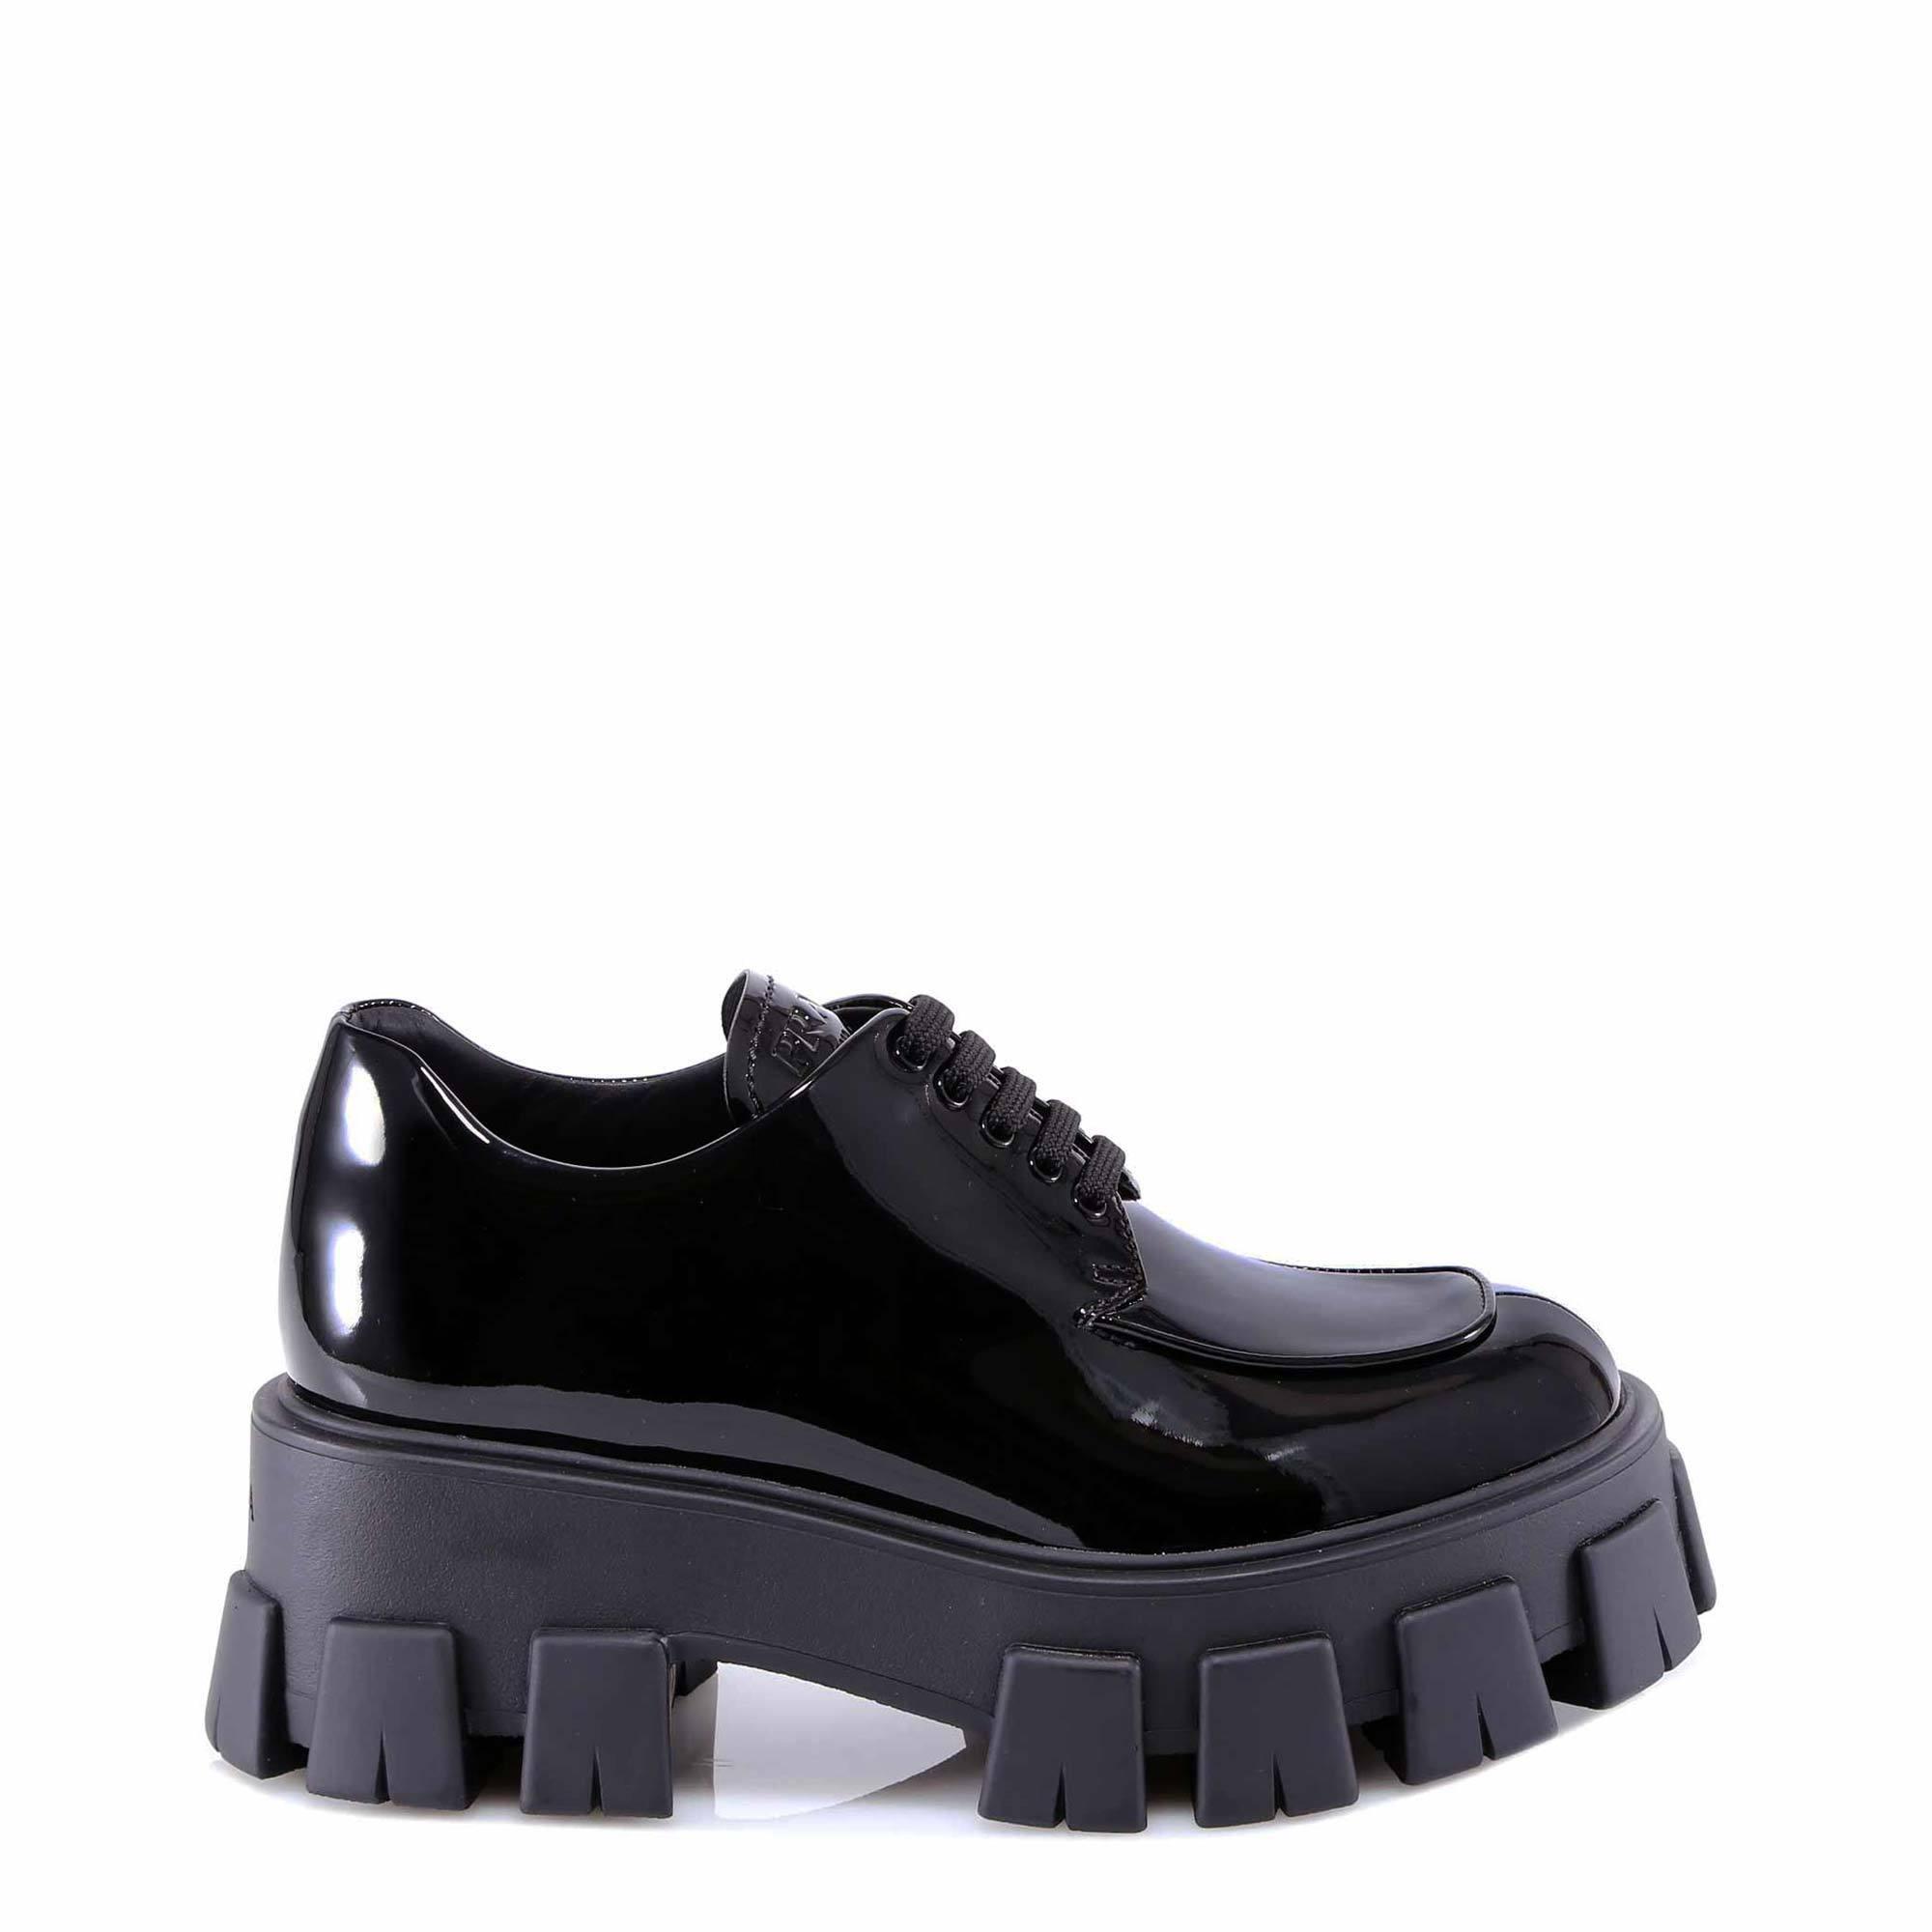 Prada Derby Platform Shoes in Black - Lyst